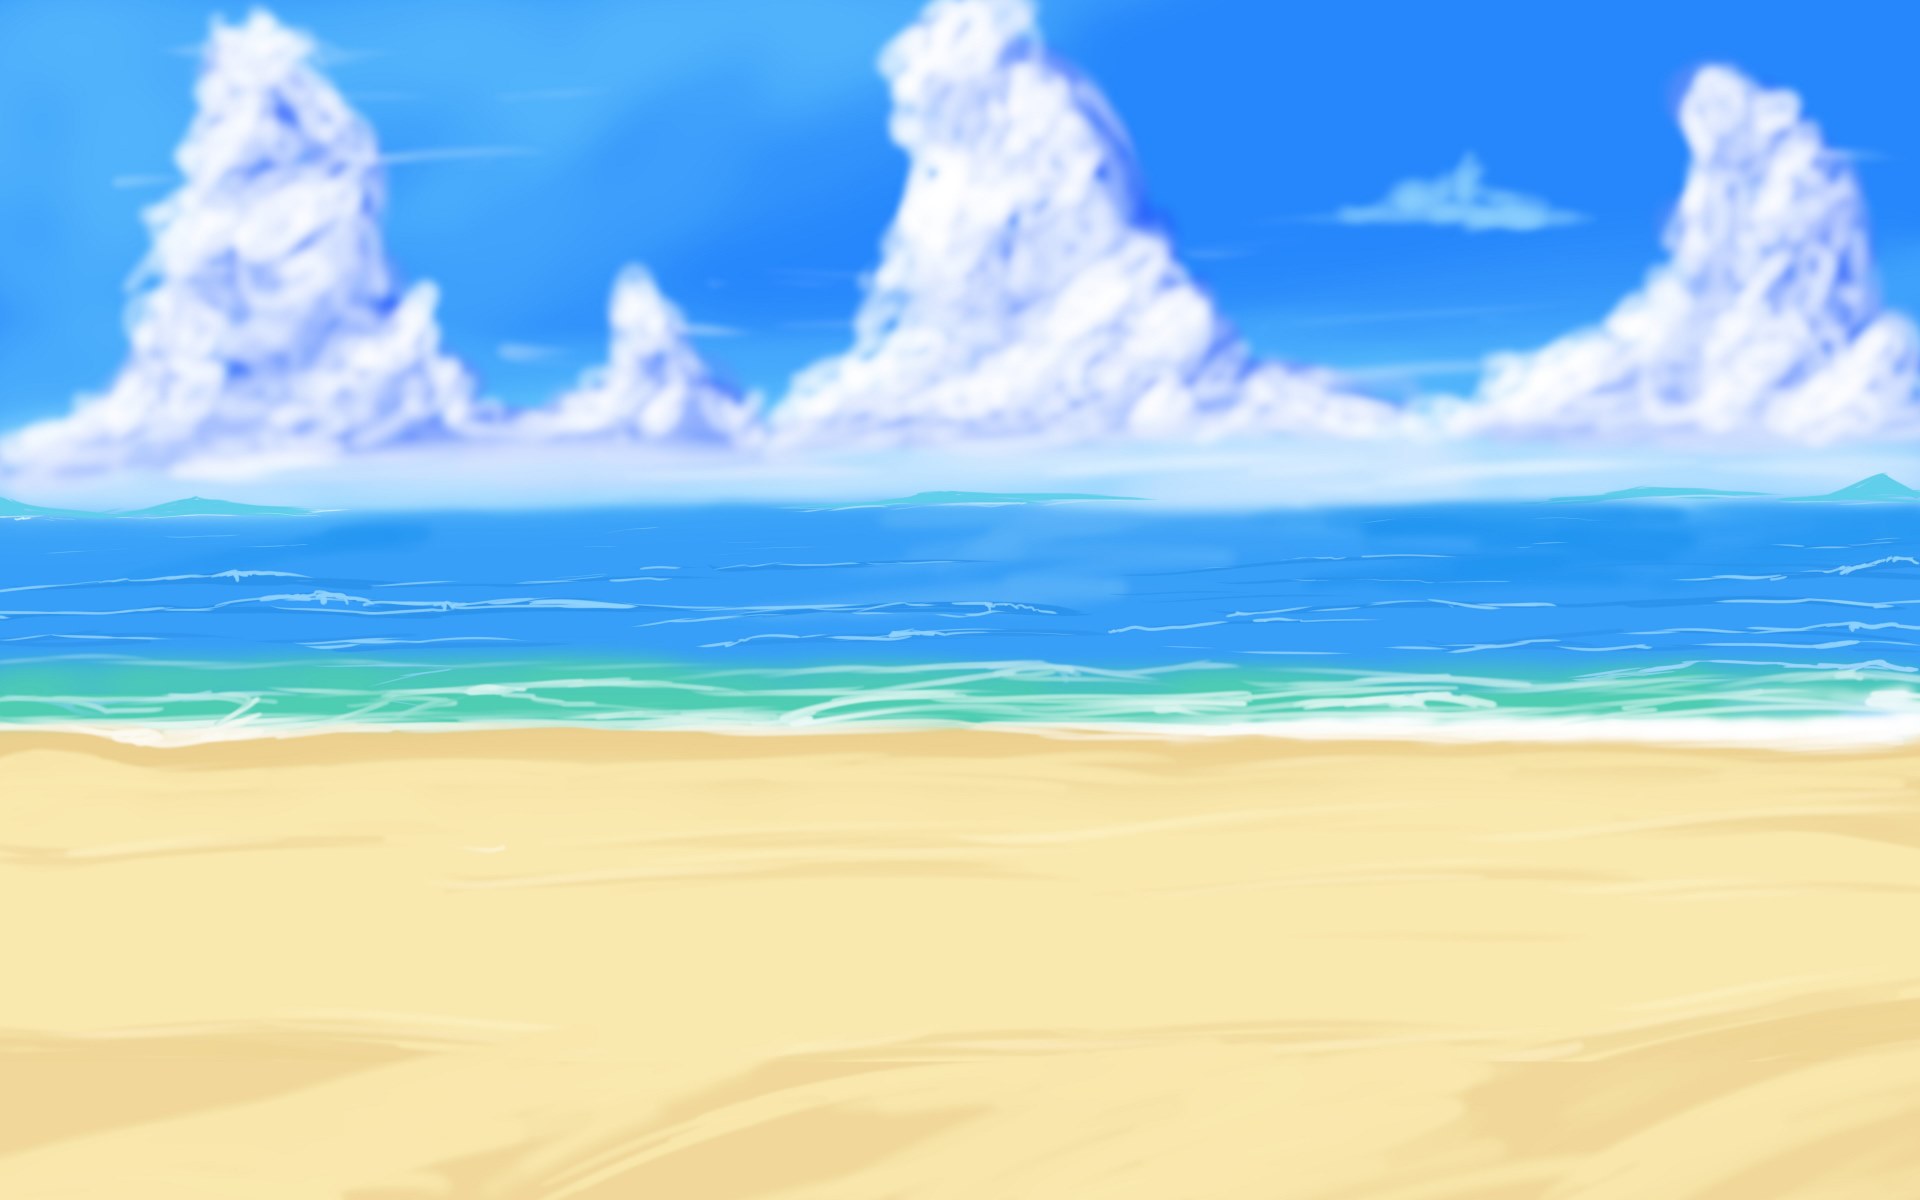 Big Anime Style Beach Background by wbd on DeviantArt.